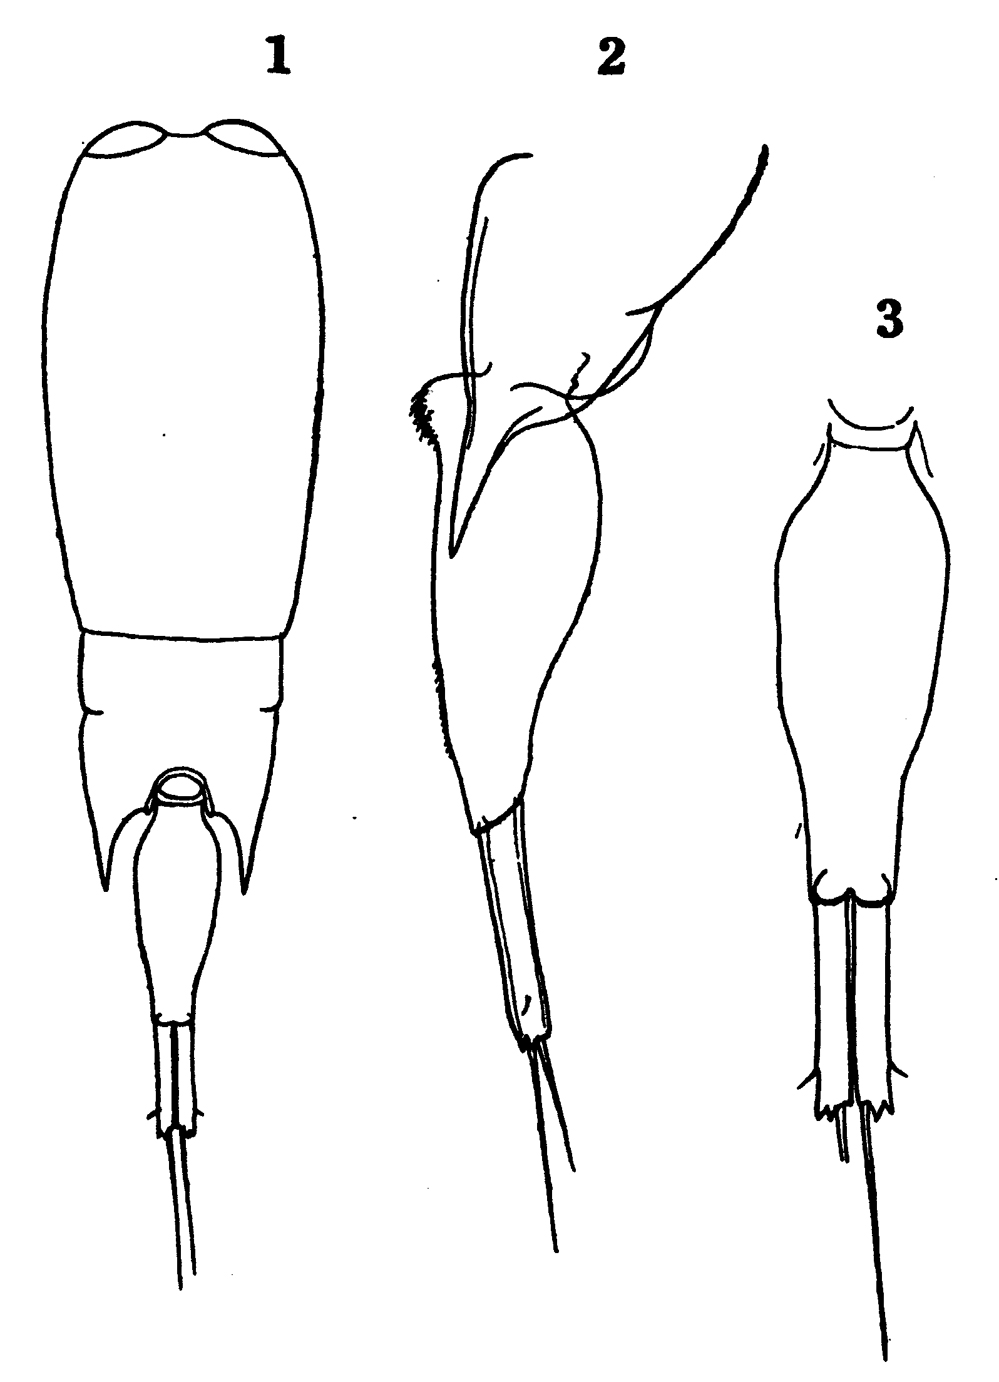 Species Farranula carinata - Plate 11 of morphological figures